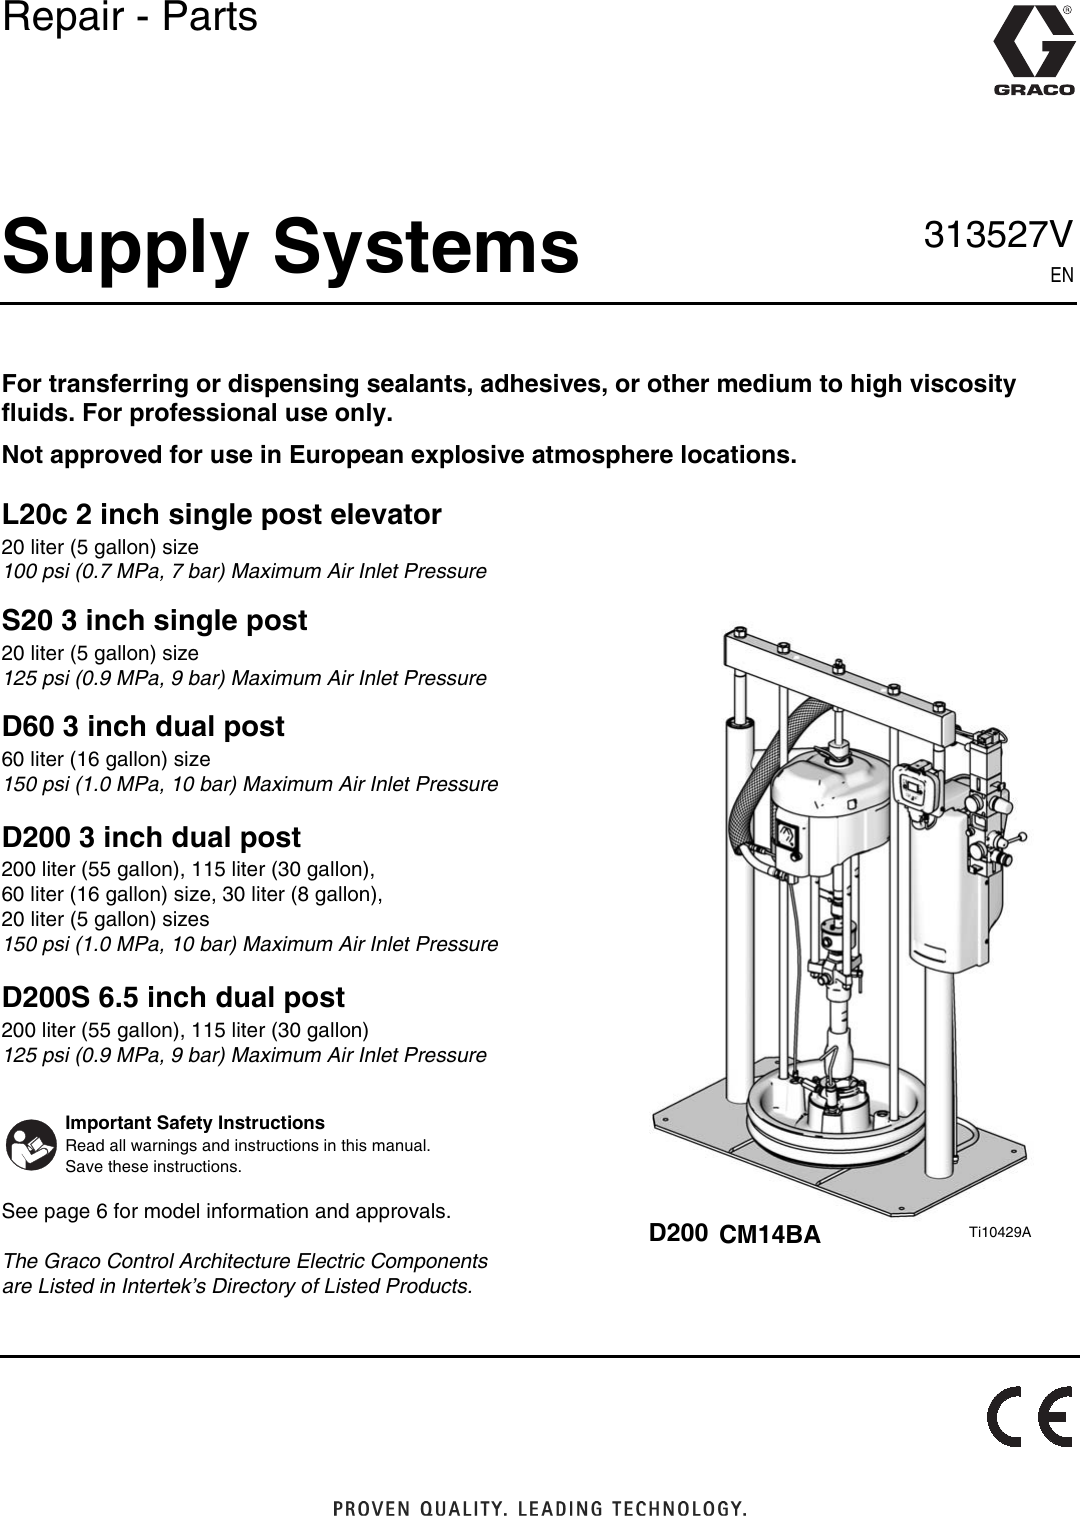 Graco 313527V Supply Systems Users Manual Systems, Repair Parts, English